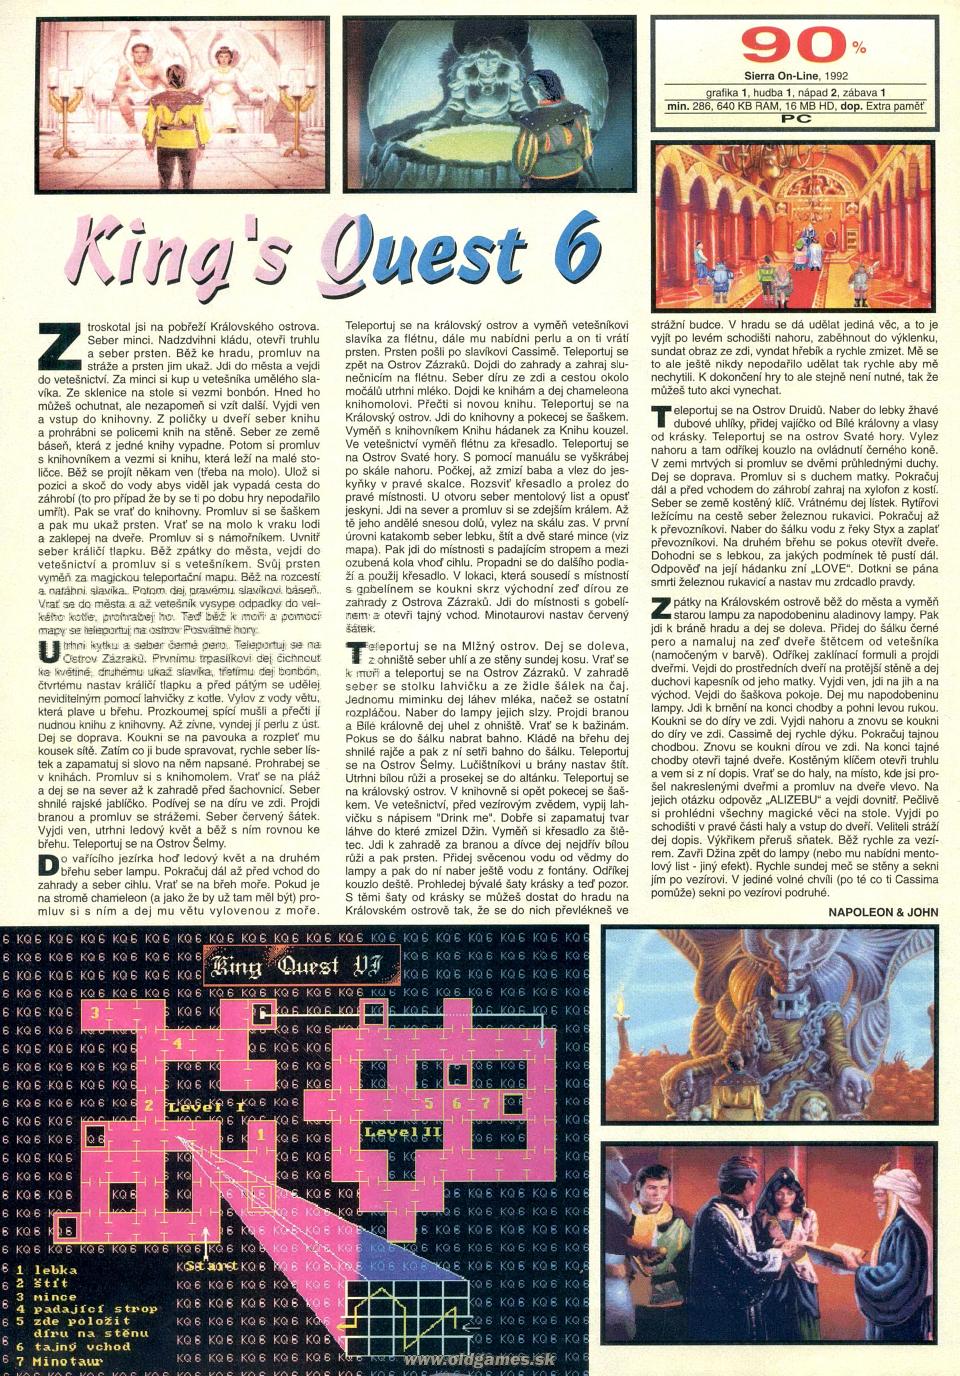 Kings Quest 6, Návod, Mapa